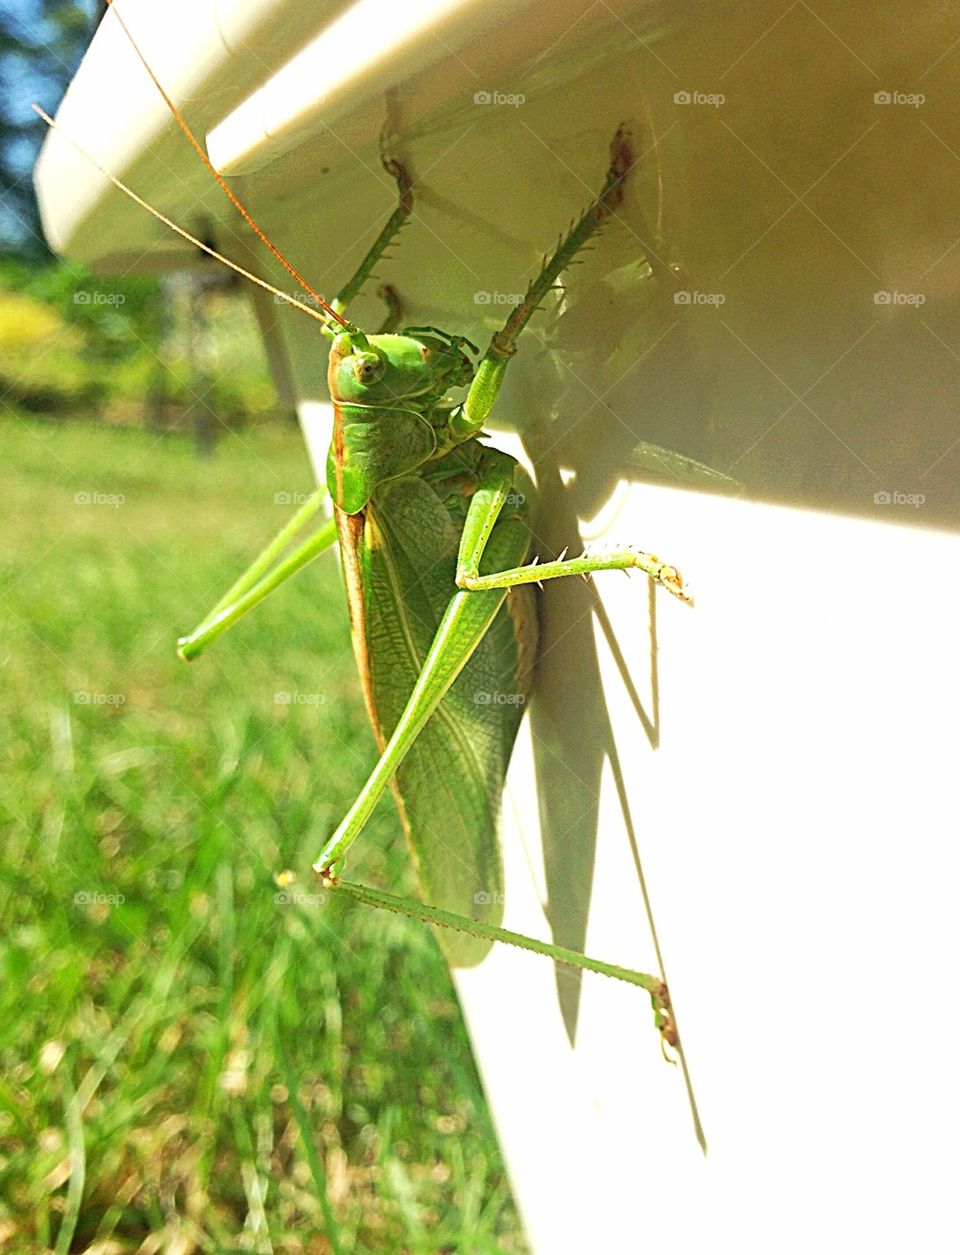 And again, a giant grasshopper